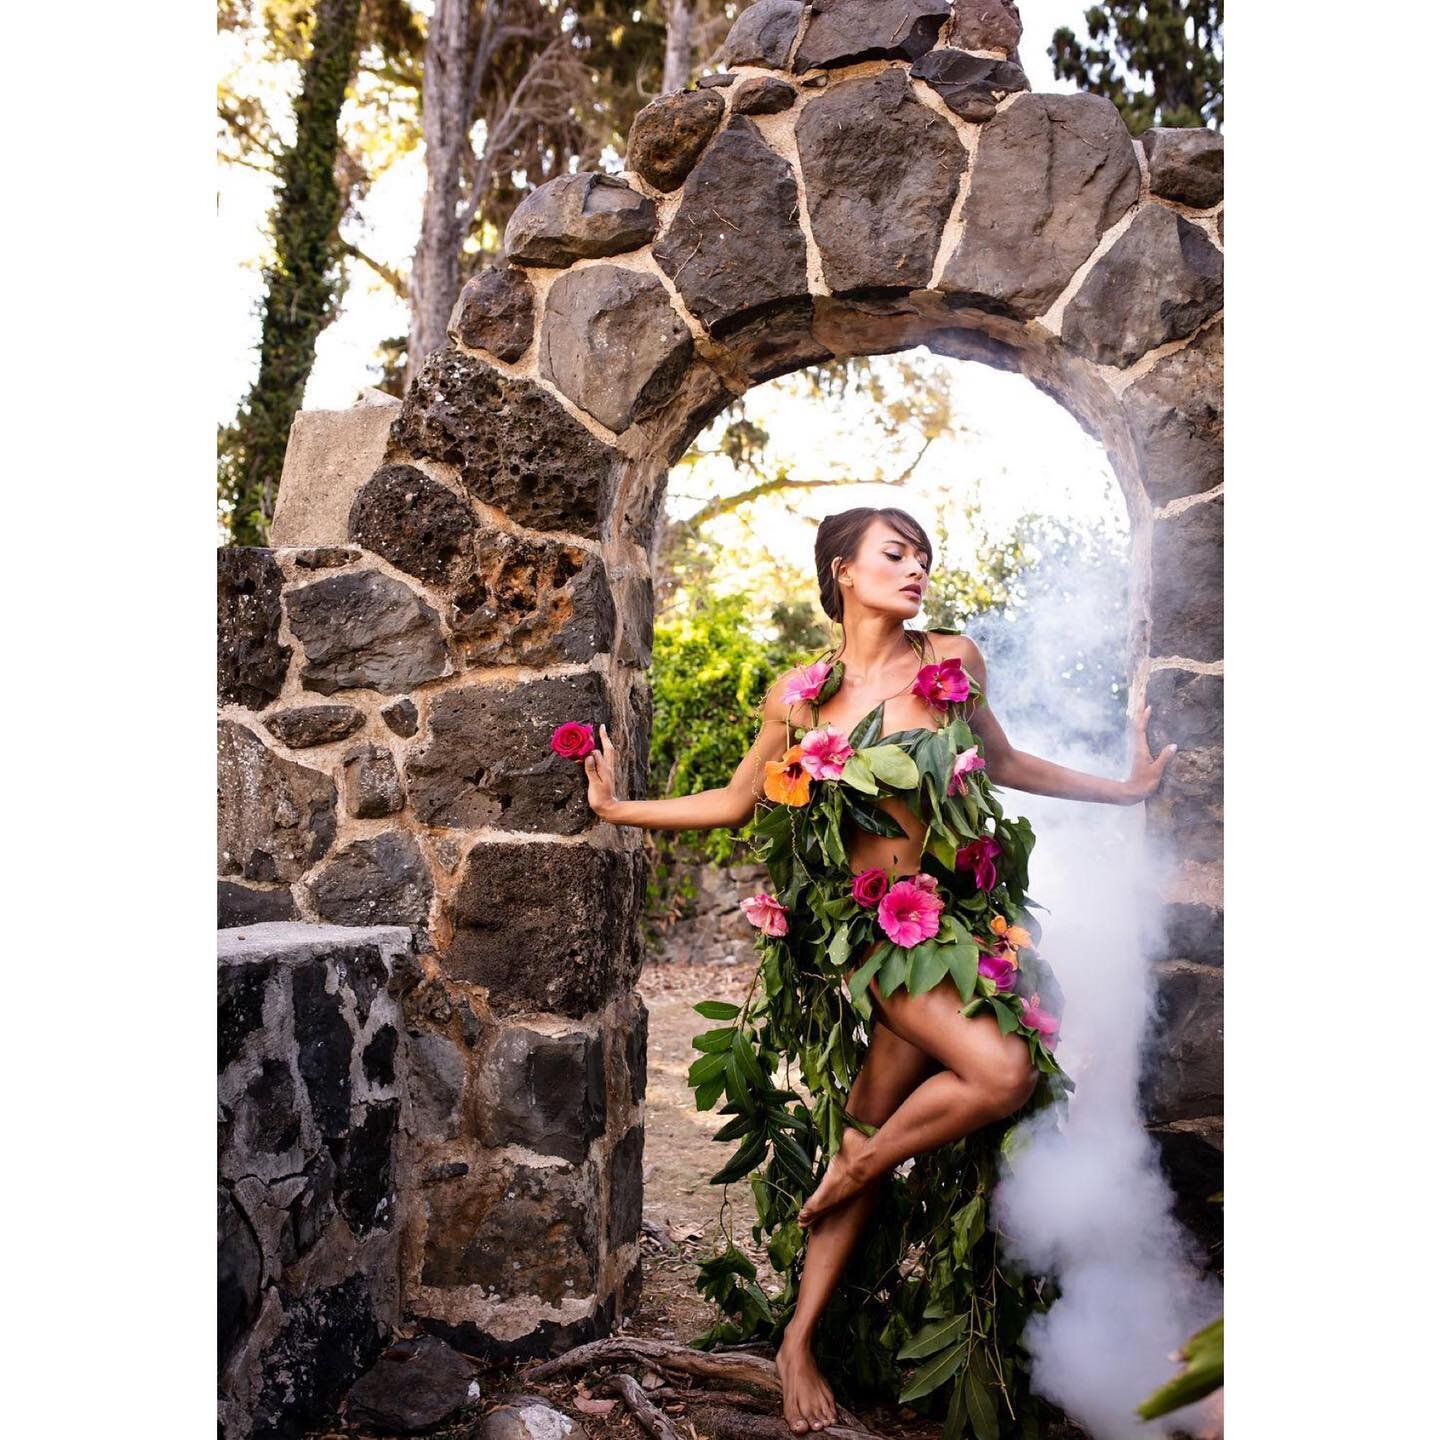 What fairytales are made of🌸🌸🌈🌈🌸🌸 check out the behind-the-scenes video!

Pc @deelianelsonphoto 
HMU @islandgirlpinups 
Flower Dress @petite.maui 
Model @modeledby_alohi 
Location @huinoeau 
.
.
.
.
.
.
.
.
#Maui #Hawaii #MauiPhotographer #Phot